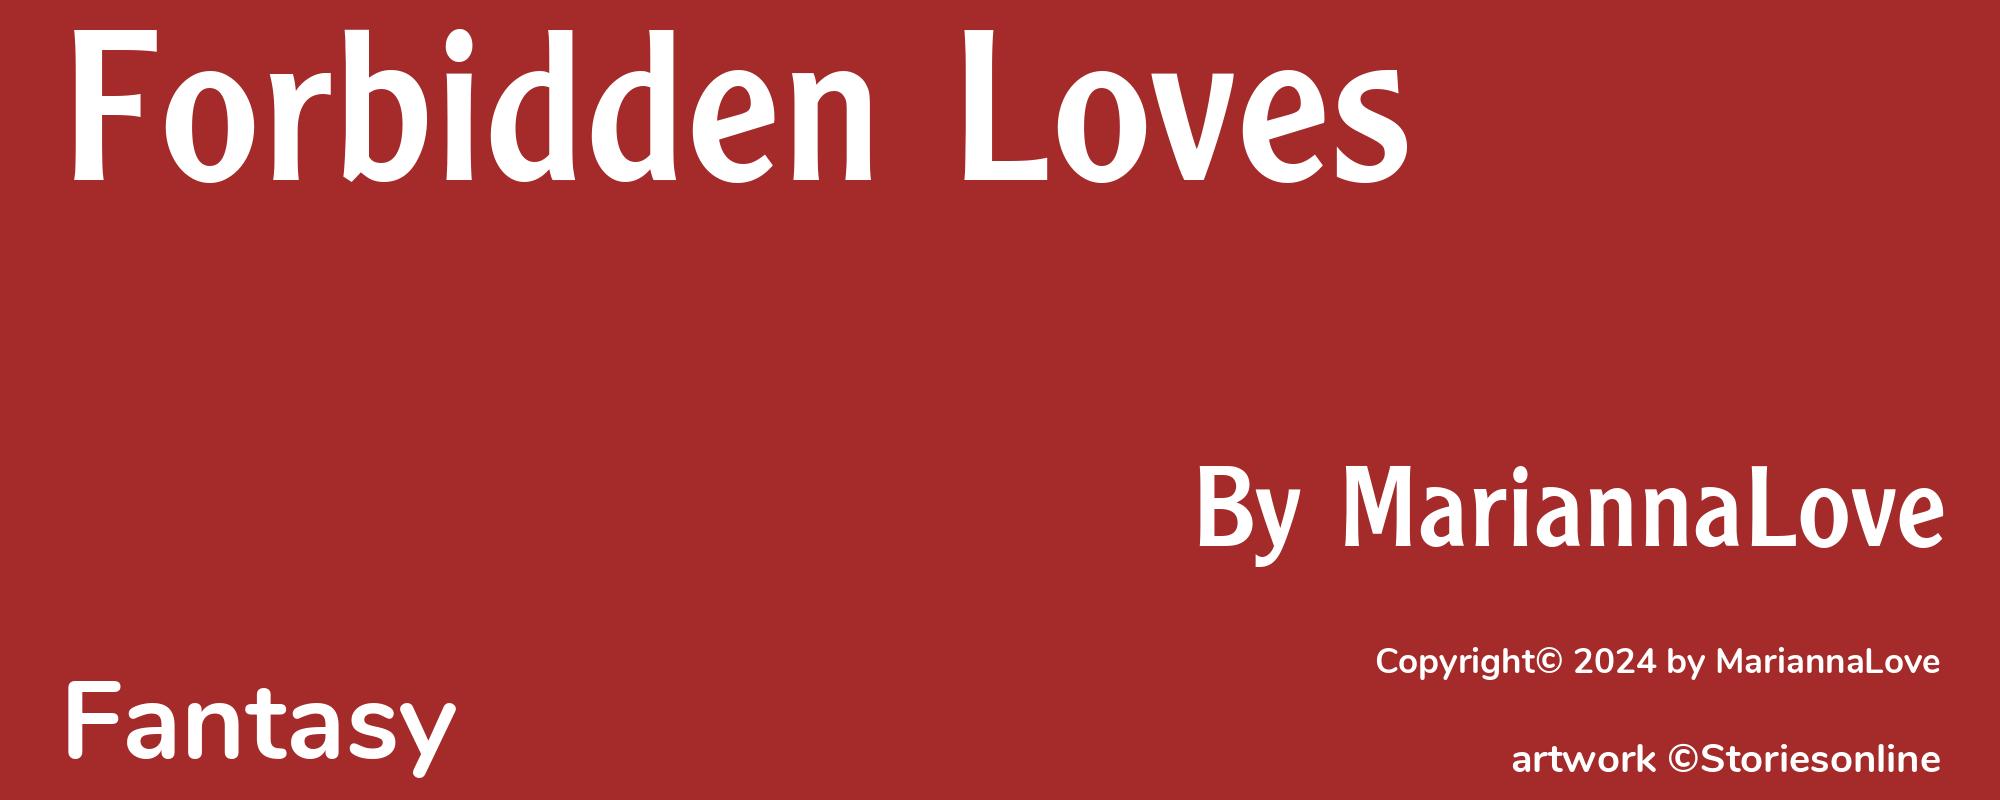 Forbidden Loves - Cover